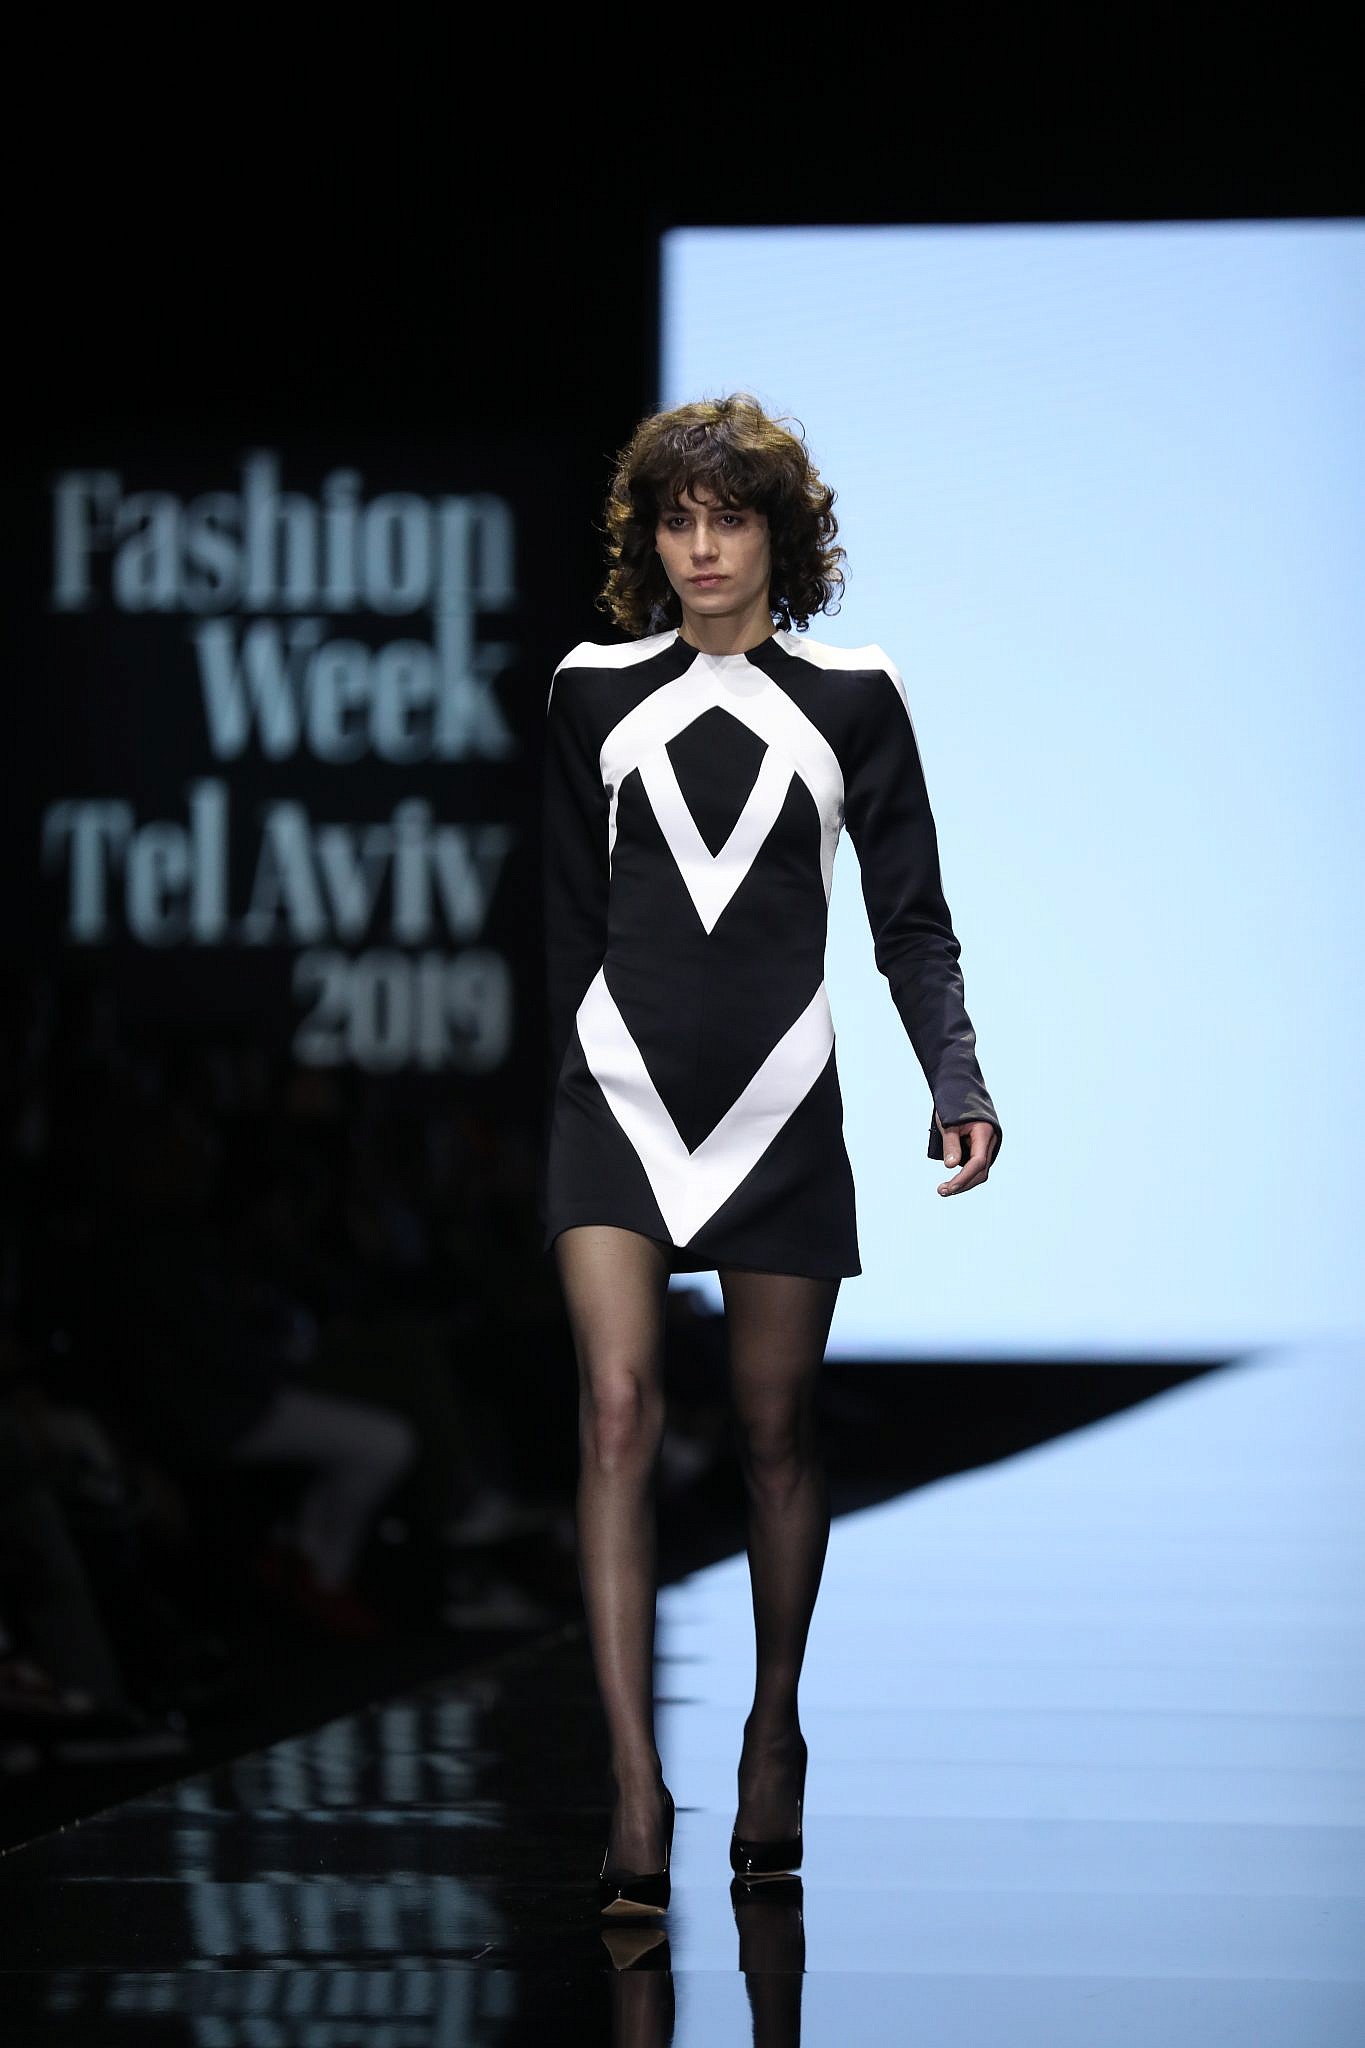 SHADI ABED מתוך התצוגה של מפעל הפיס בשבוע האופנה 2019. צילום אדריאן סבל